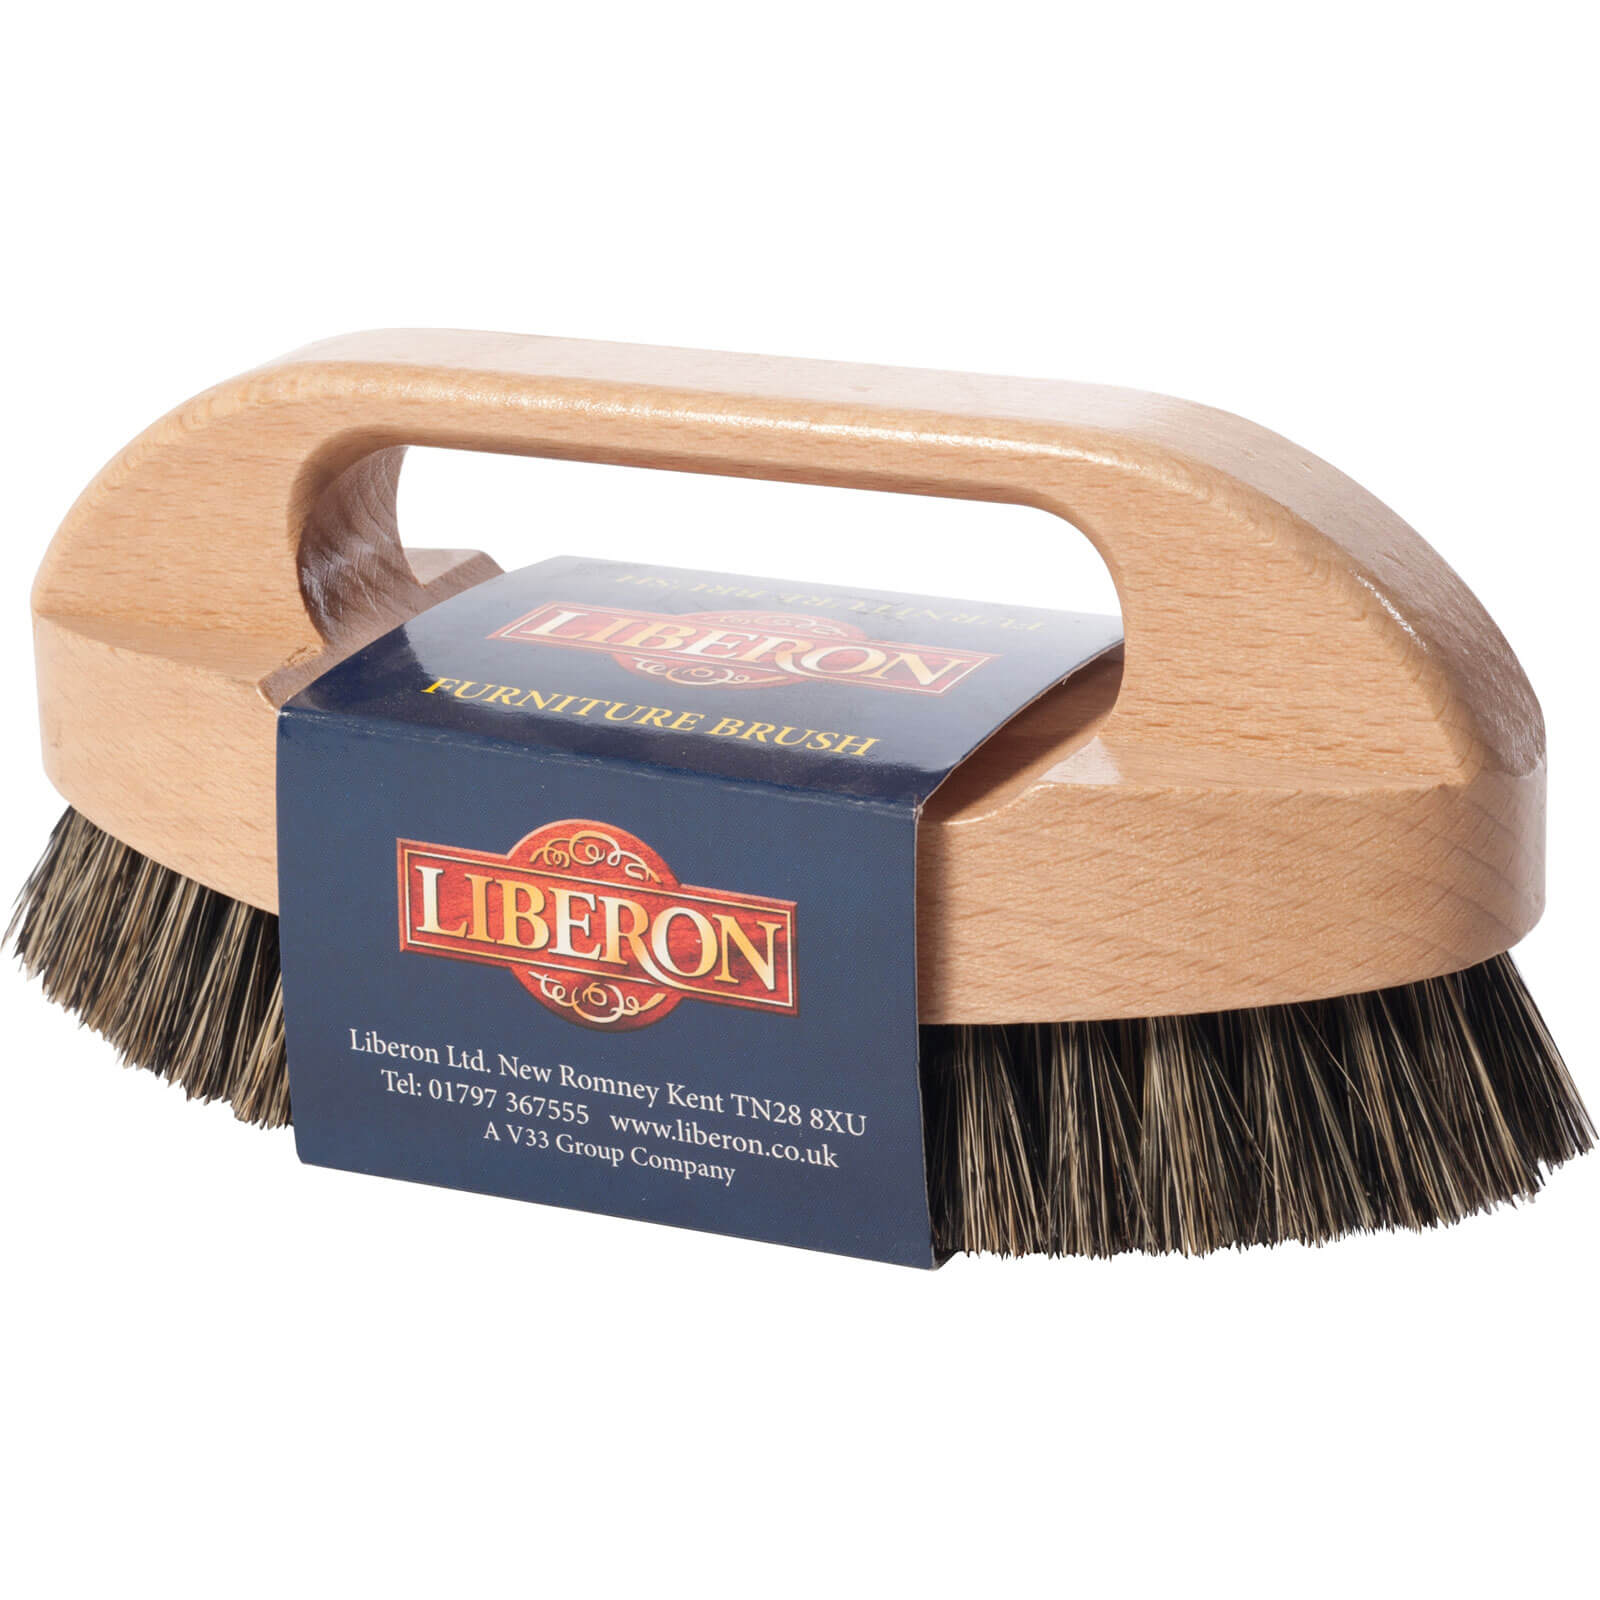 Image of Liberon Furniture Brush